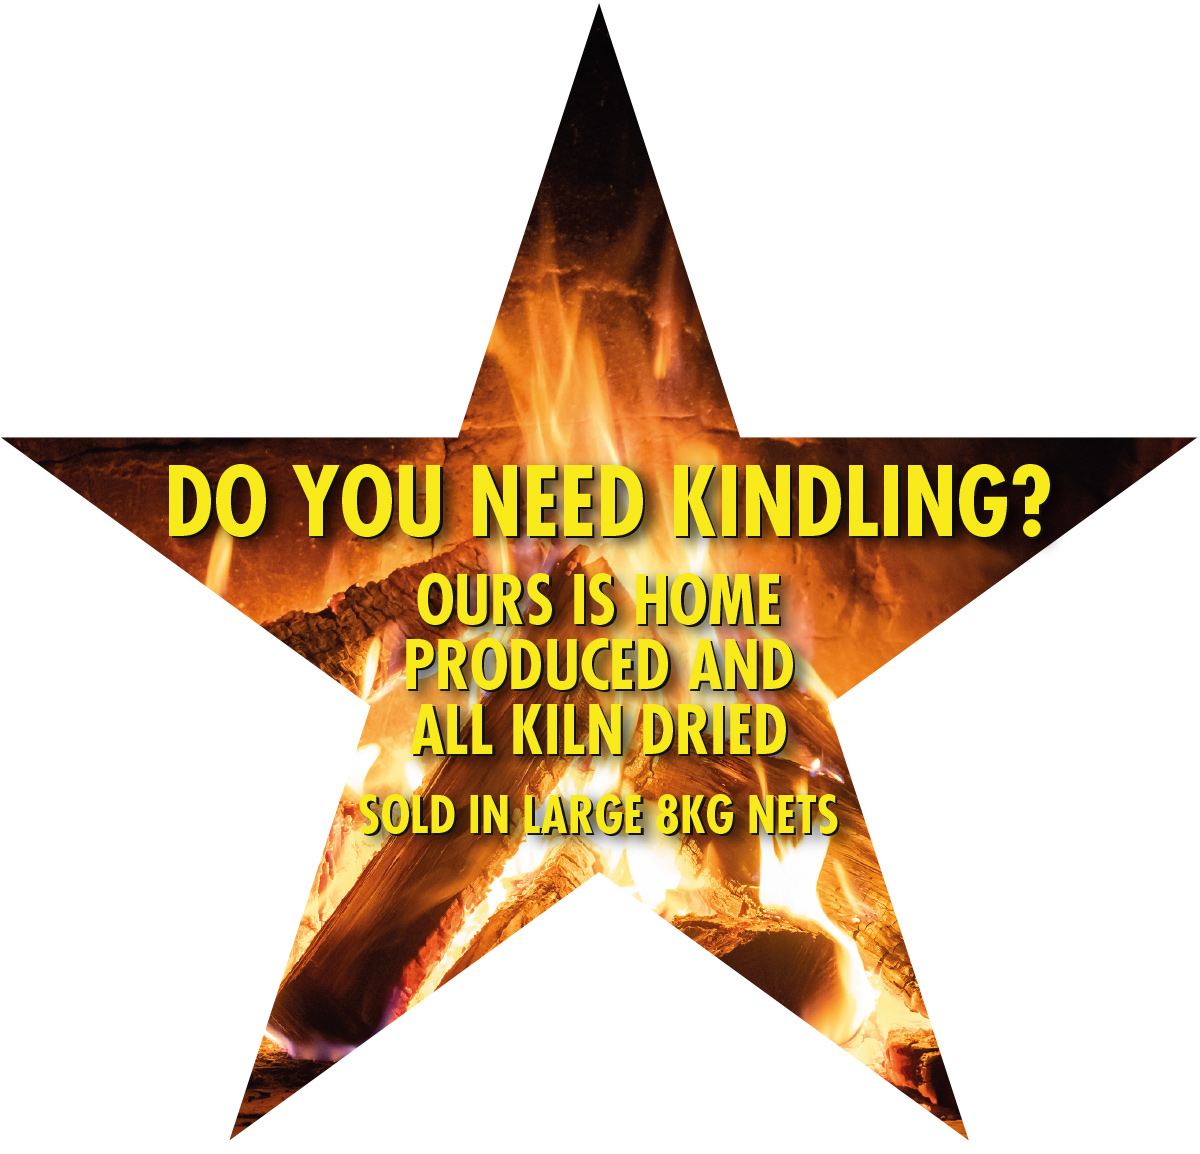 Do you need kindling?